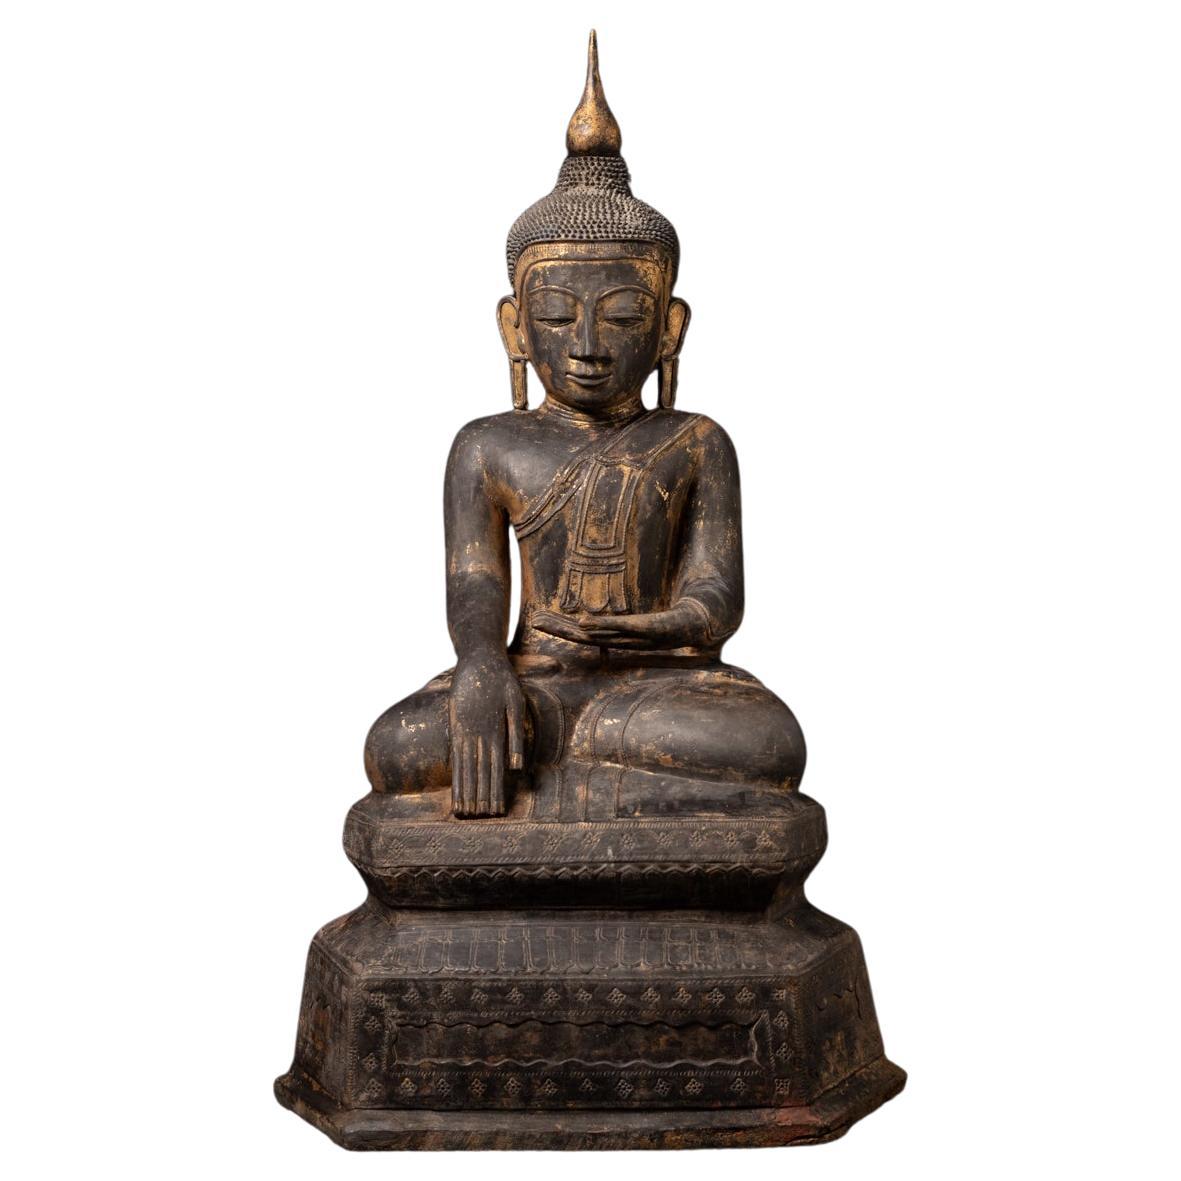 18th century Special antique Burmese Buddha statue from Burma